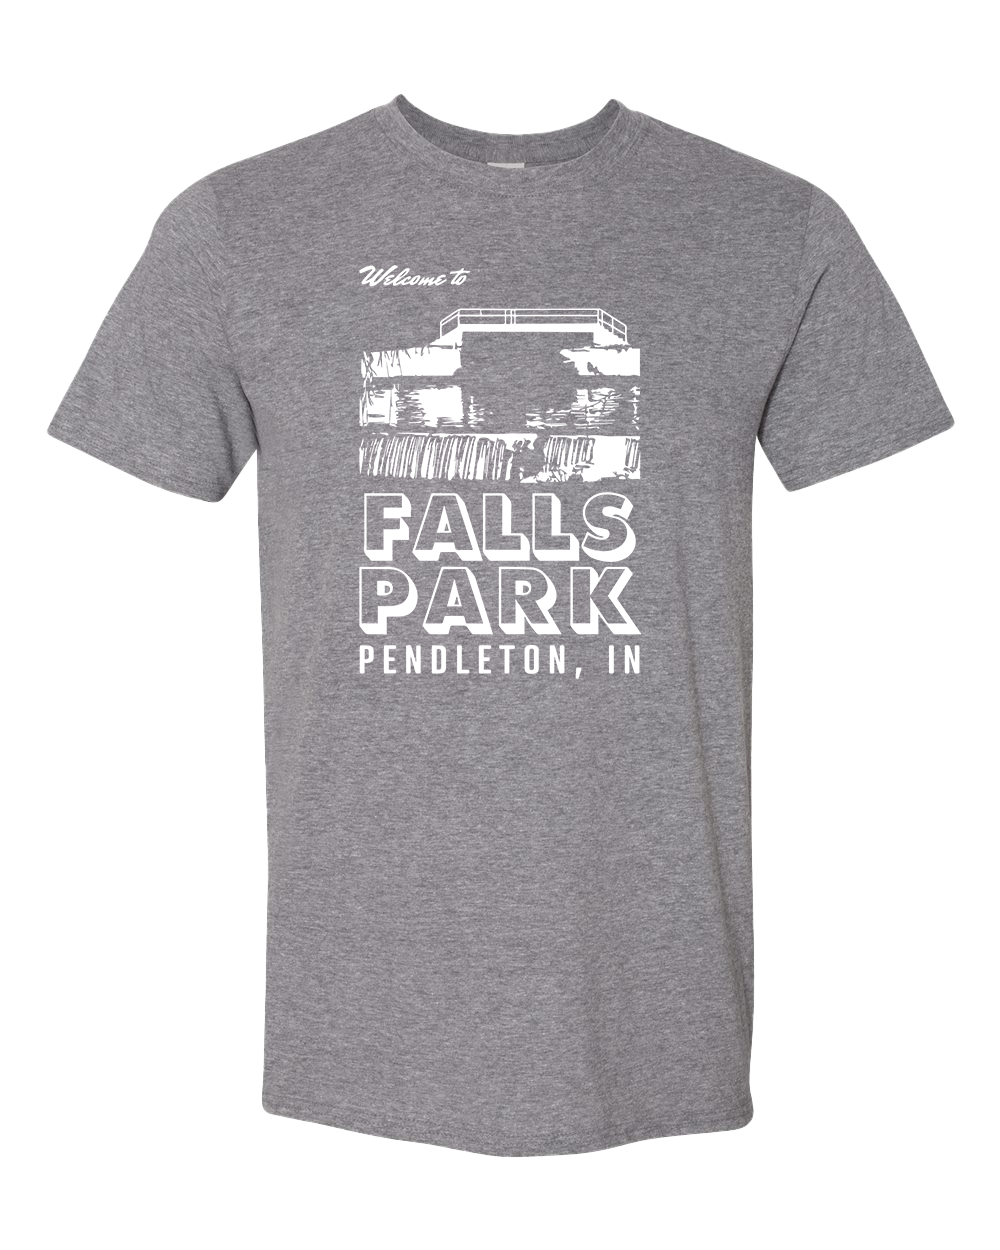 Falls Park Pendleton Tshirt - Graphite Heather